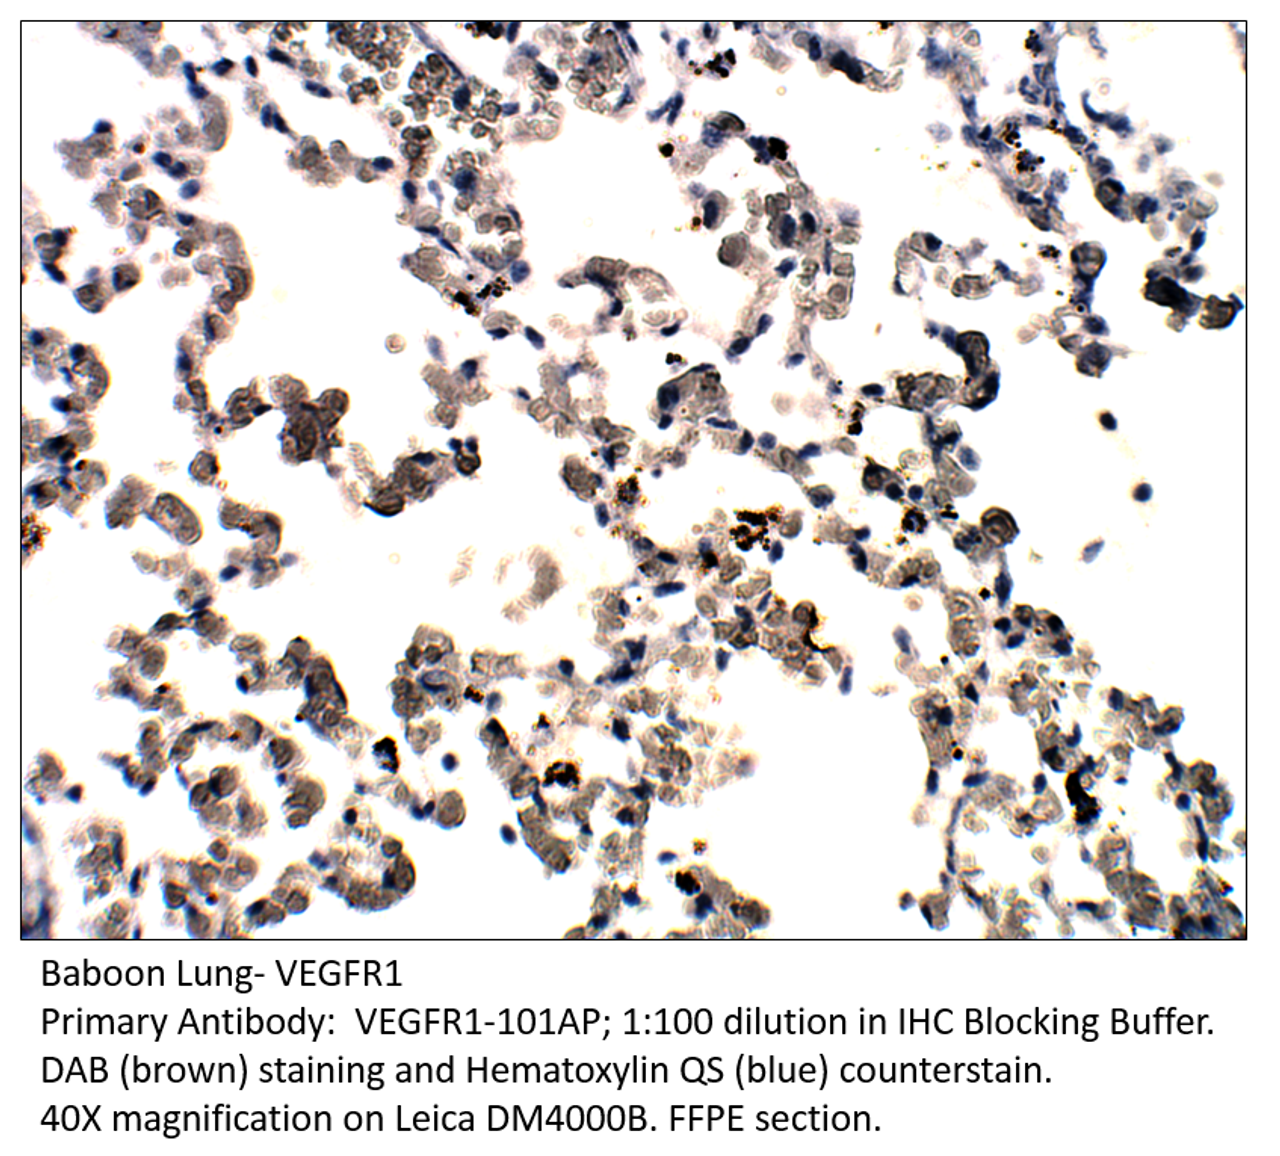 VEGFR1 Antibody from Fabgennix